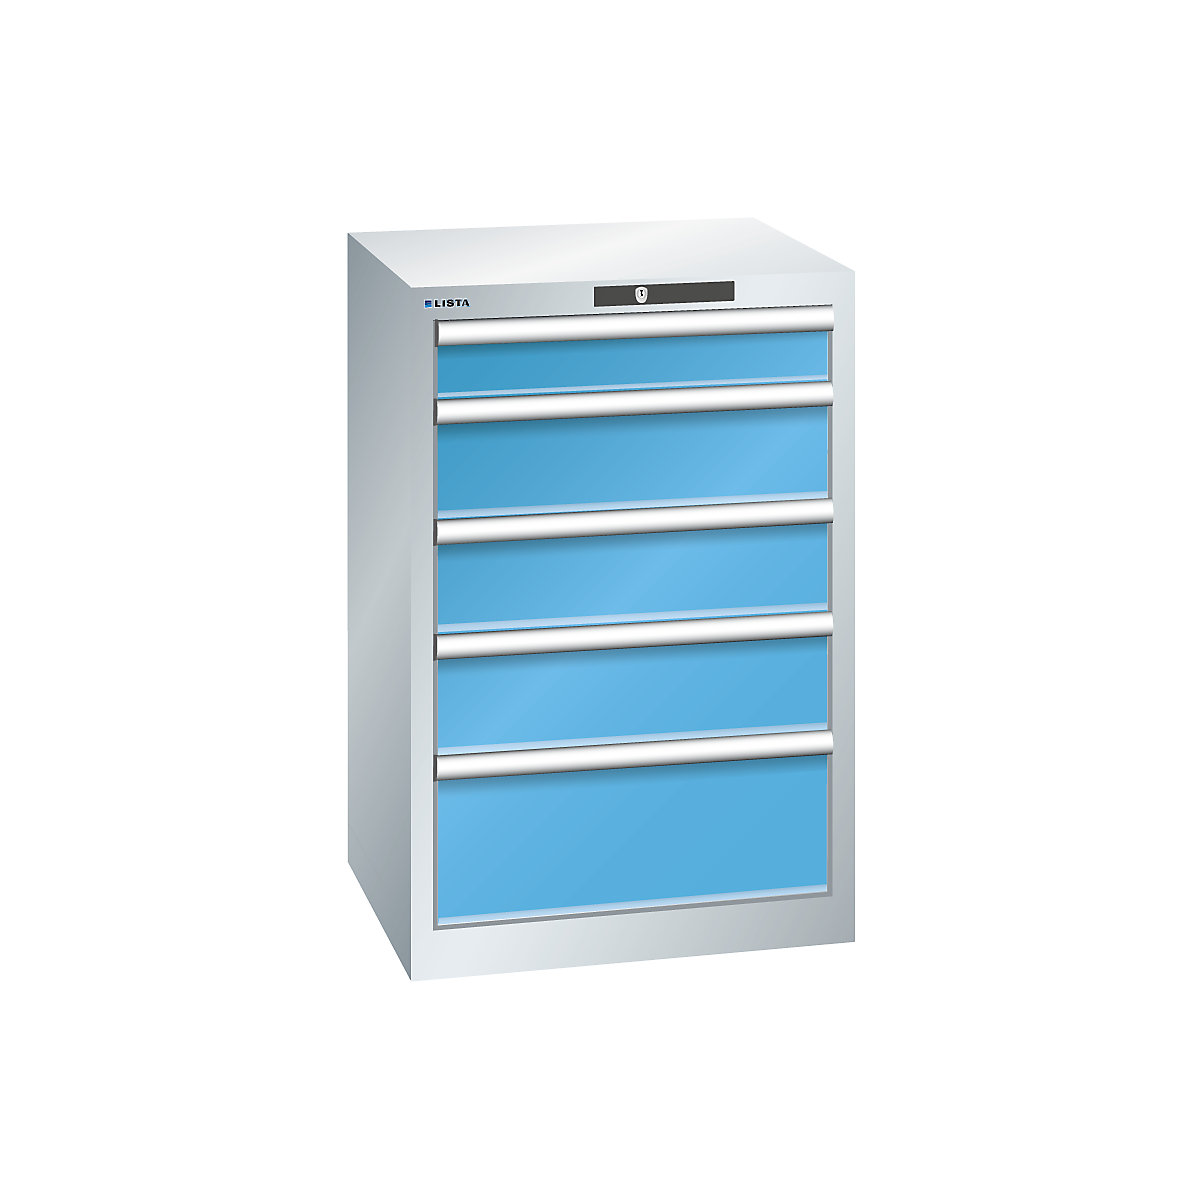 Drawer cupboard, 5 drawers – LISTA, WxDxH 564 x 572 x 850 mm, light grey / light blue-3